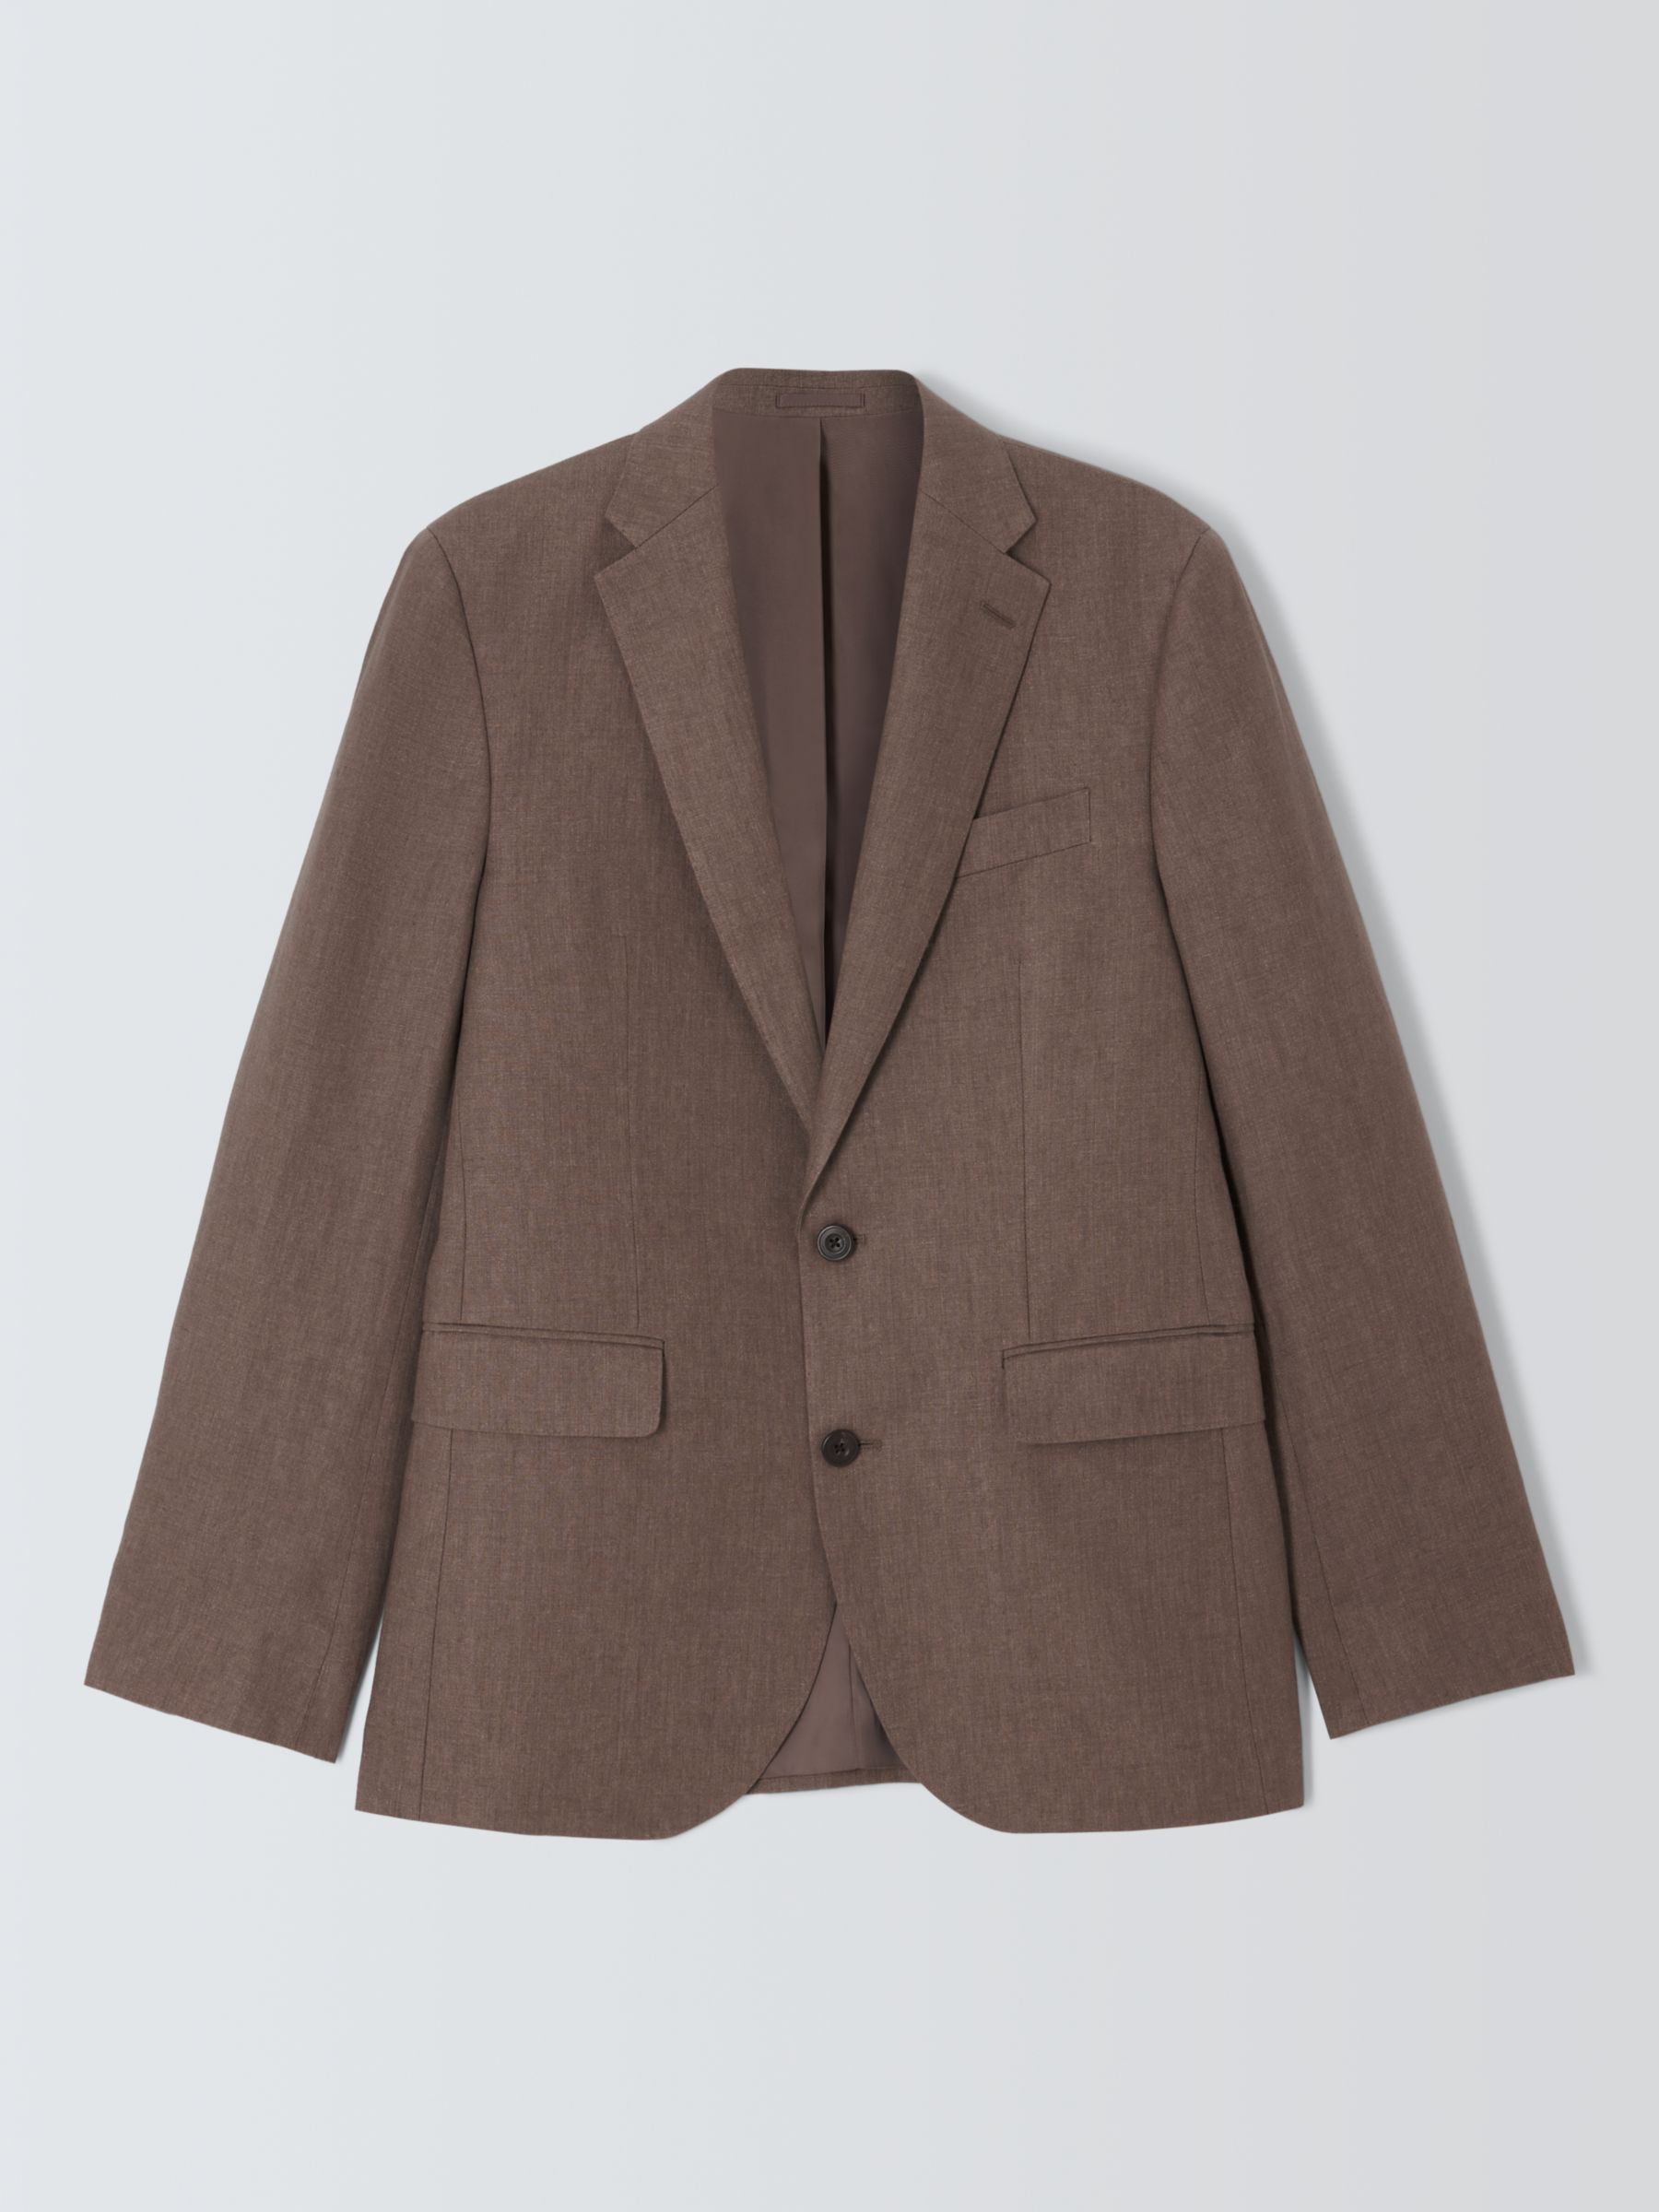 John Lewis Cambridge Linen Single Breasted Regular Fit Suit Jacket, Brown, 36R